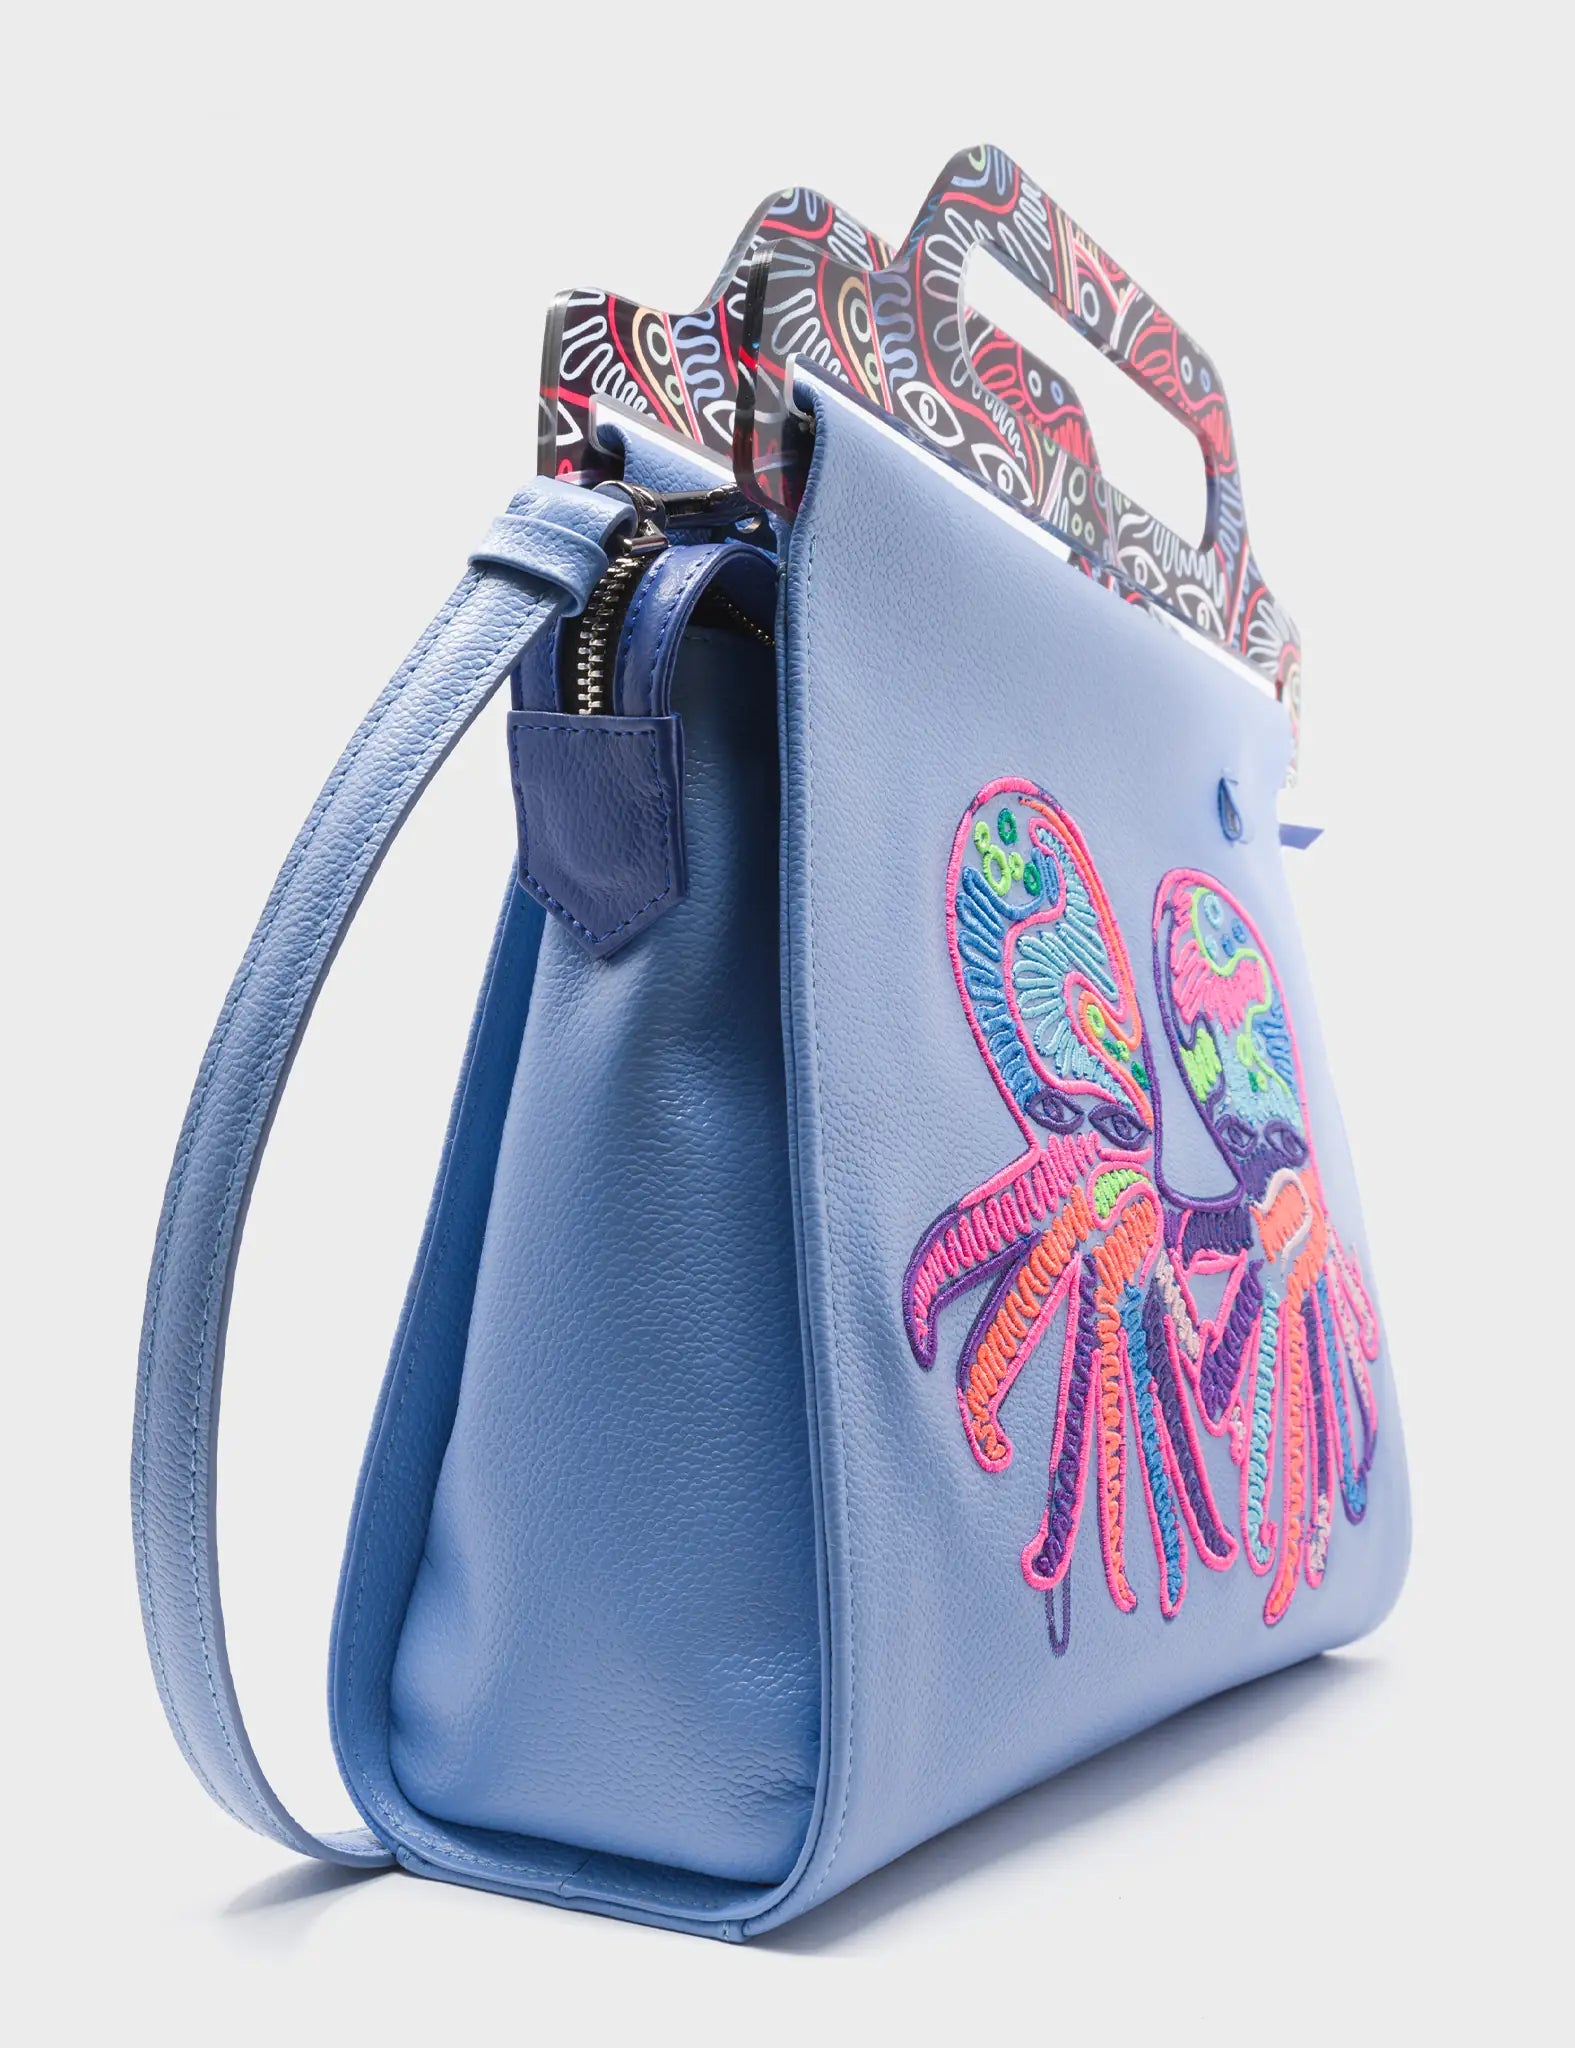 Crossbody Blue Leather Handbag Multicolored Octopus Design - Side 